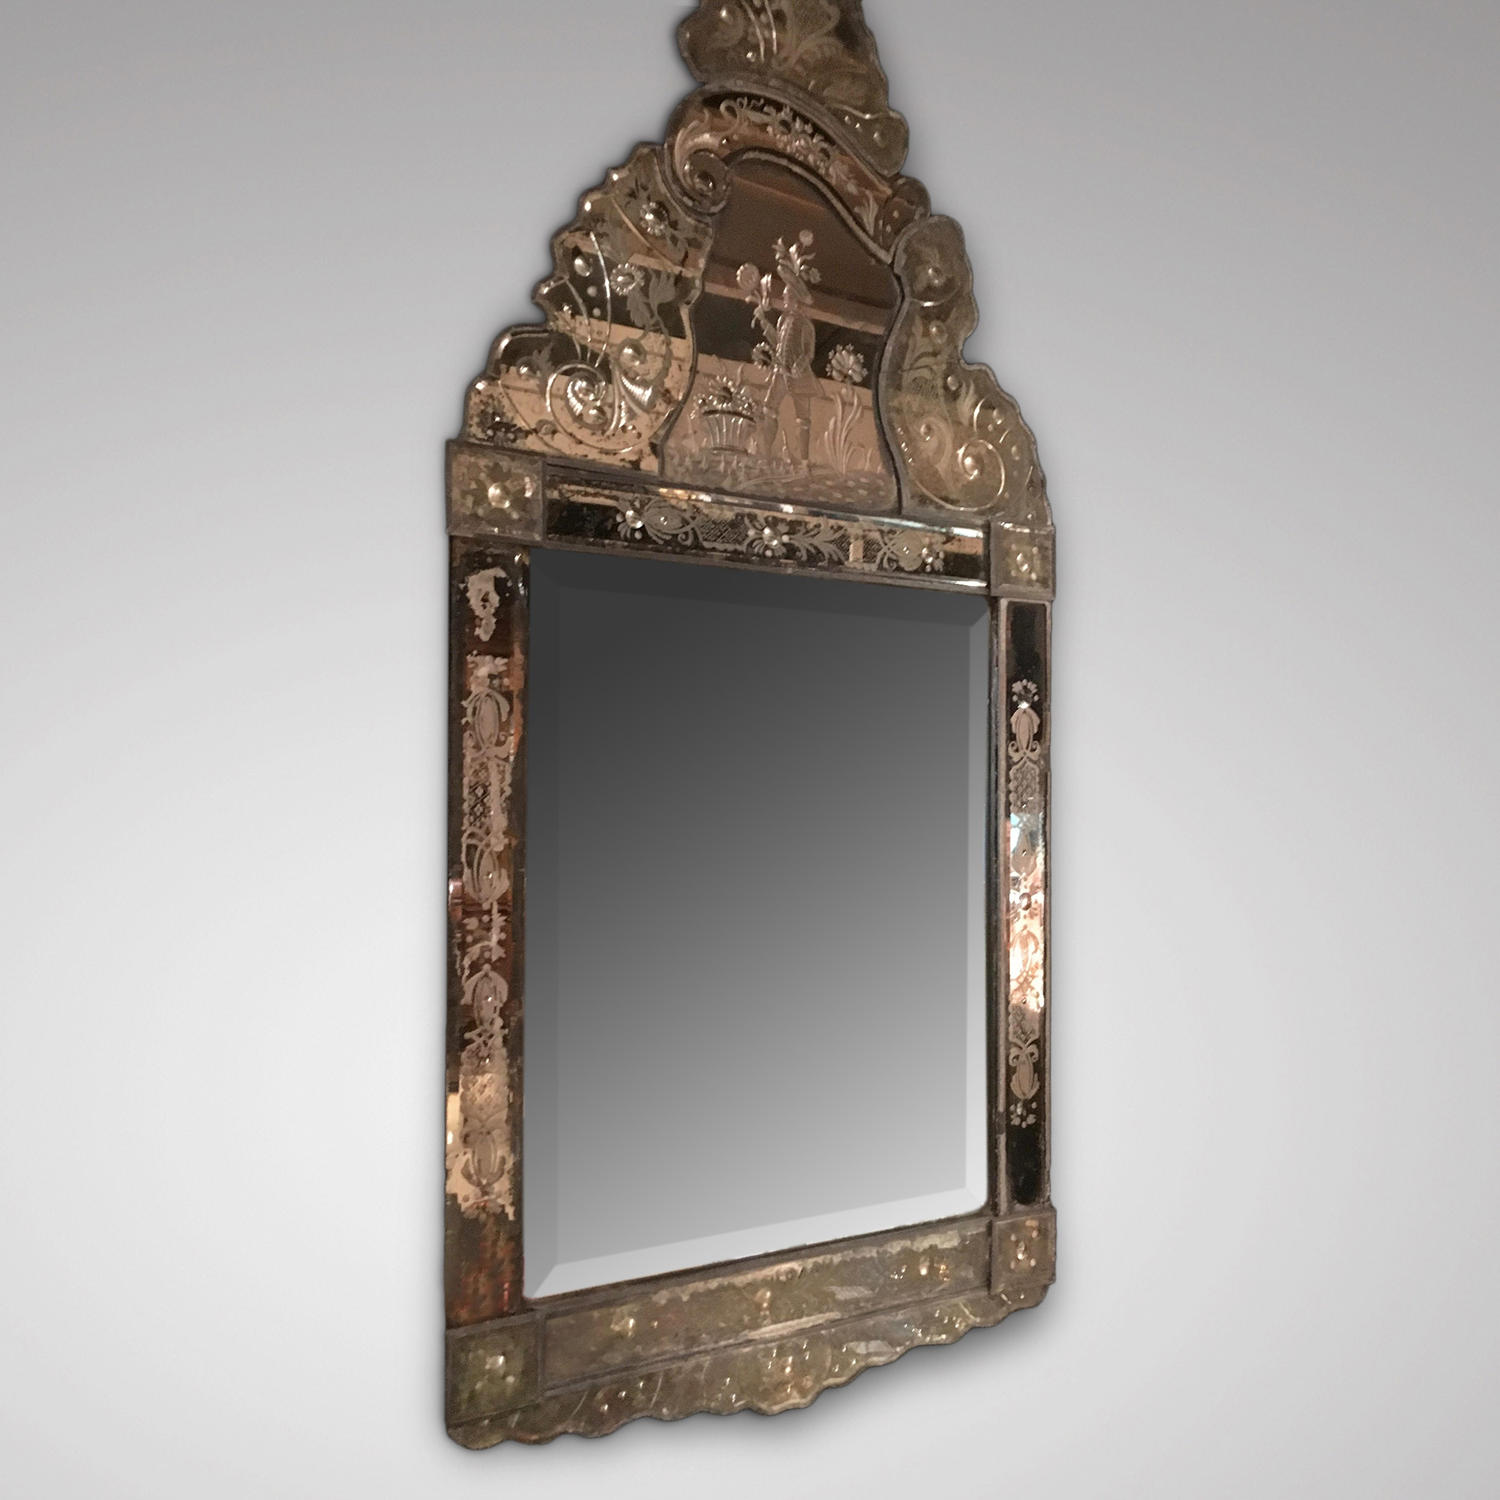 A17th century Venetian mirror